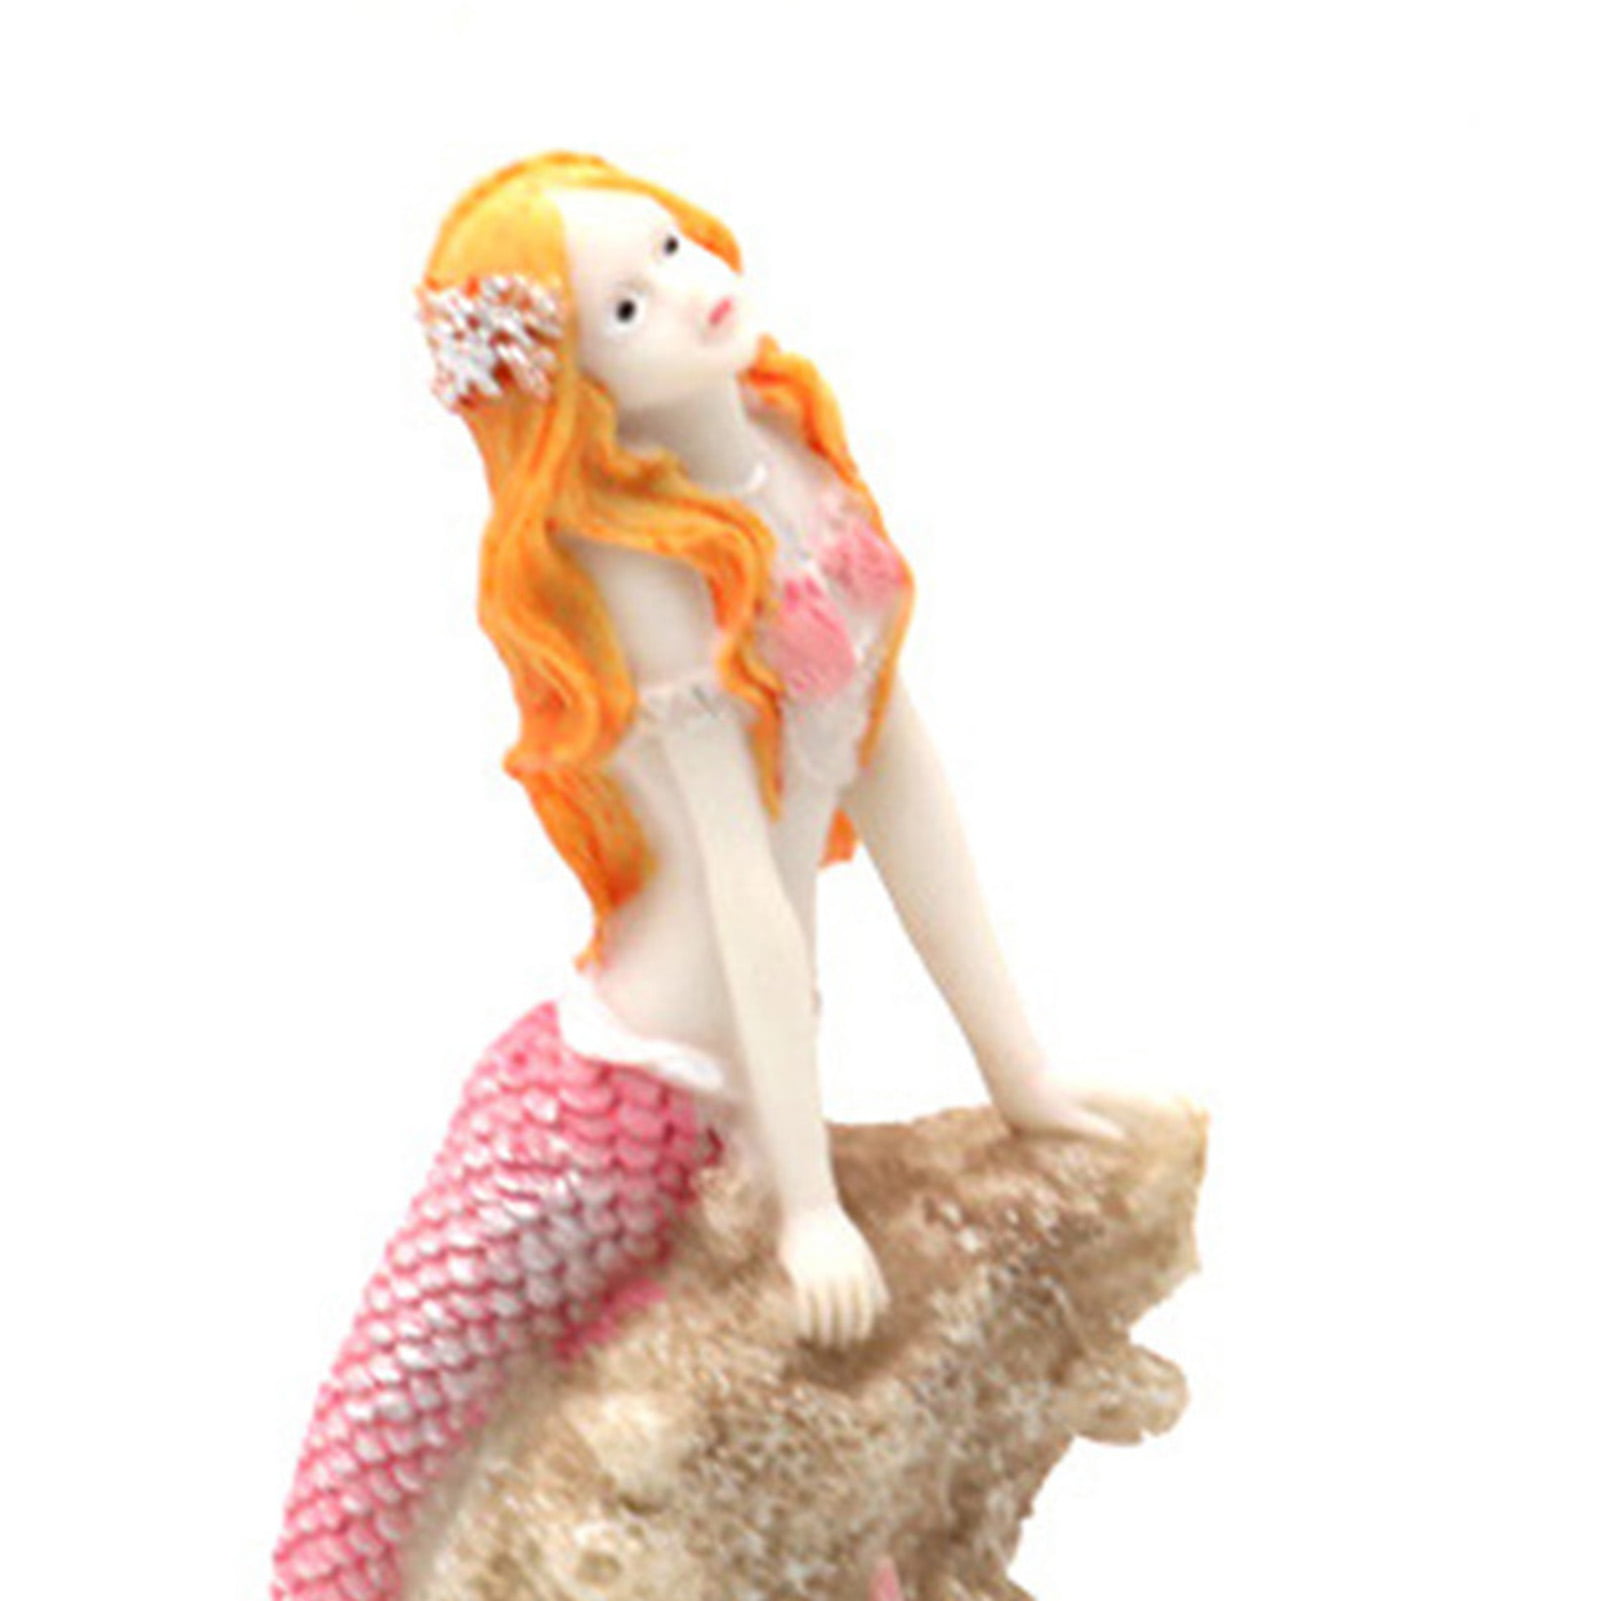 Yirtree Mermaid Figurines Decor,Aquarium Beautiful 7.09 Resin  Mediterranean Style Mermaid Princess Statue Art Ornaments  Sculpture,Birthday Gifts for